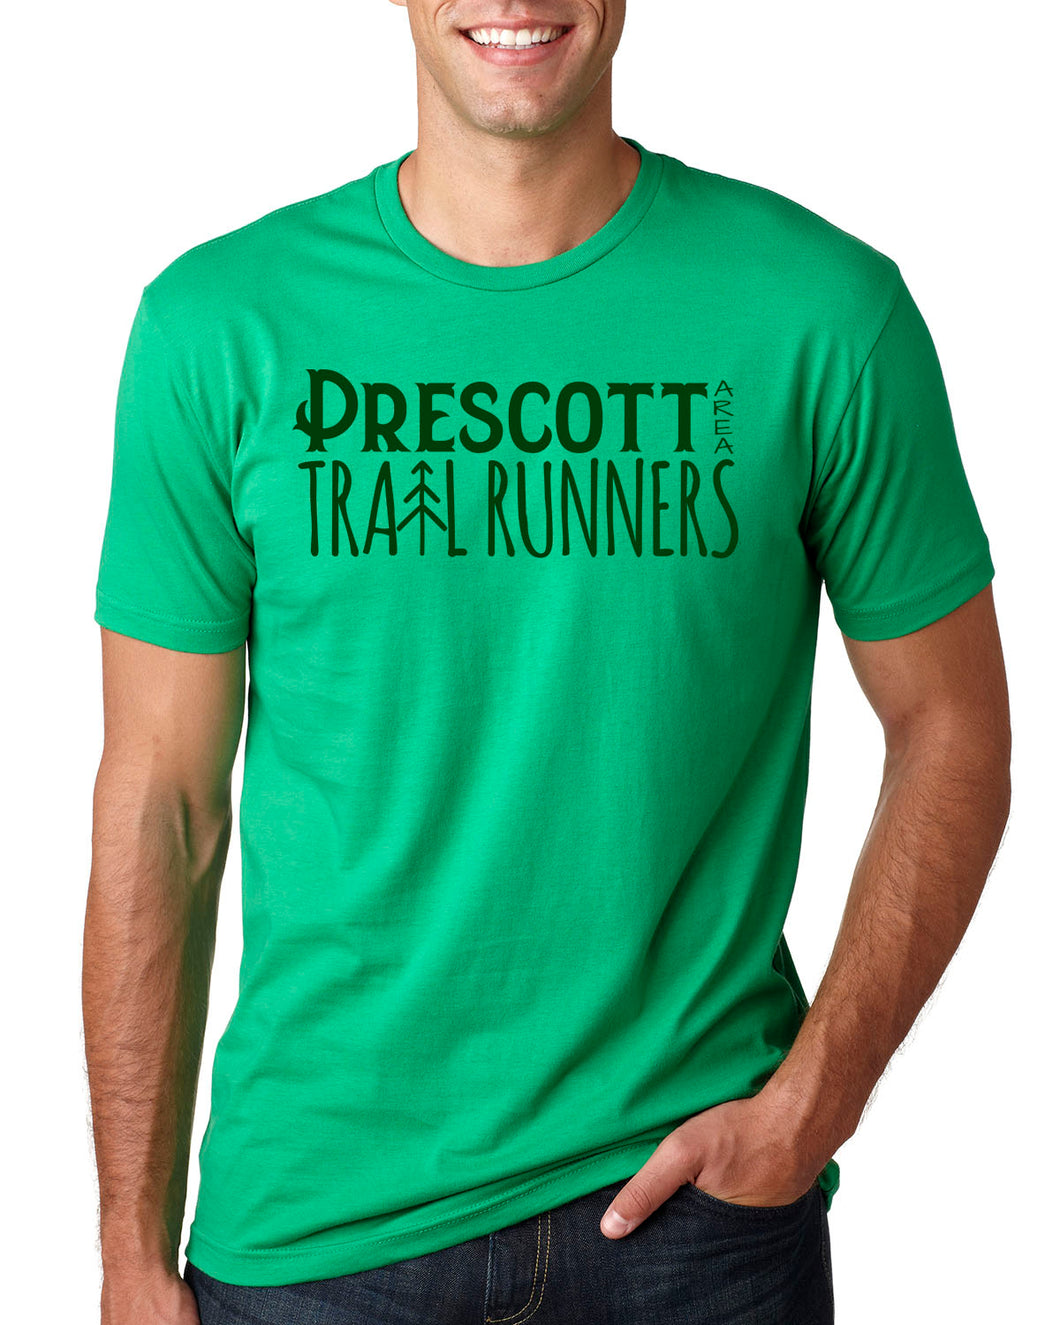 PATR - Prescott Area Trail Runners - Pine Tree Men's T-Shirt